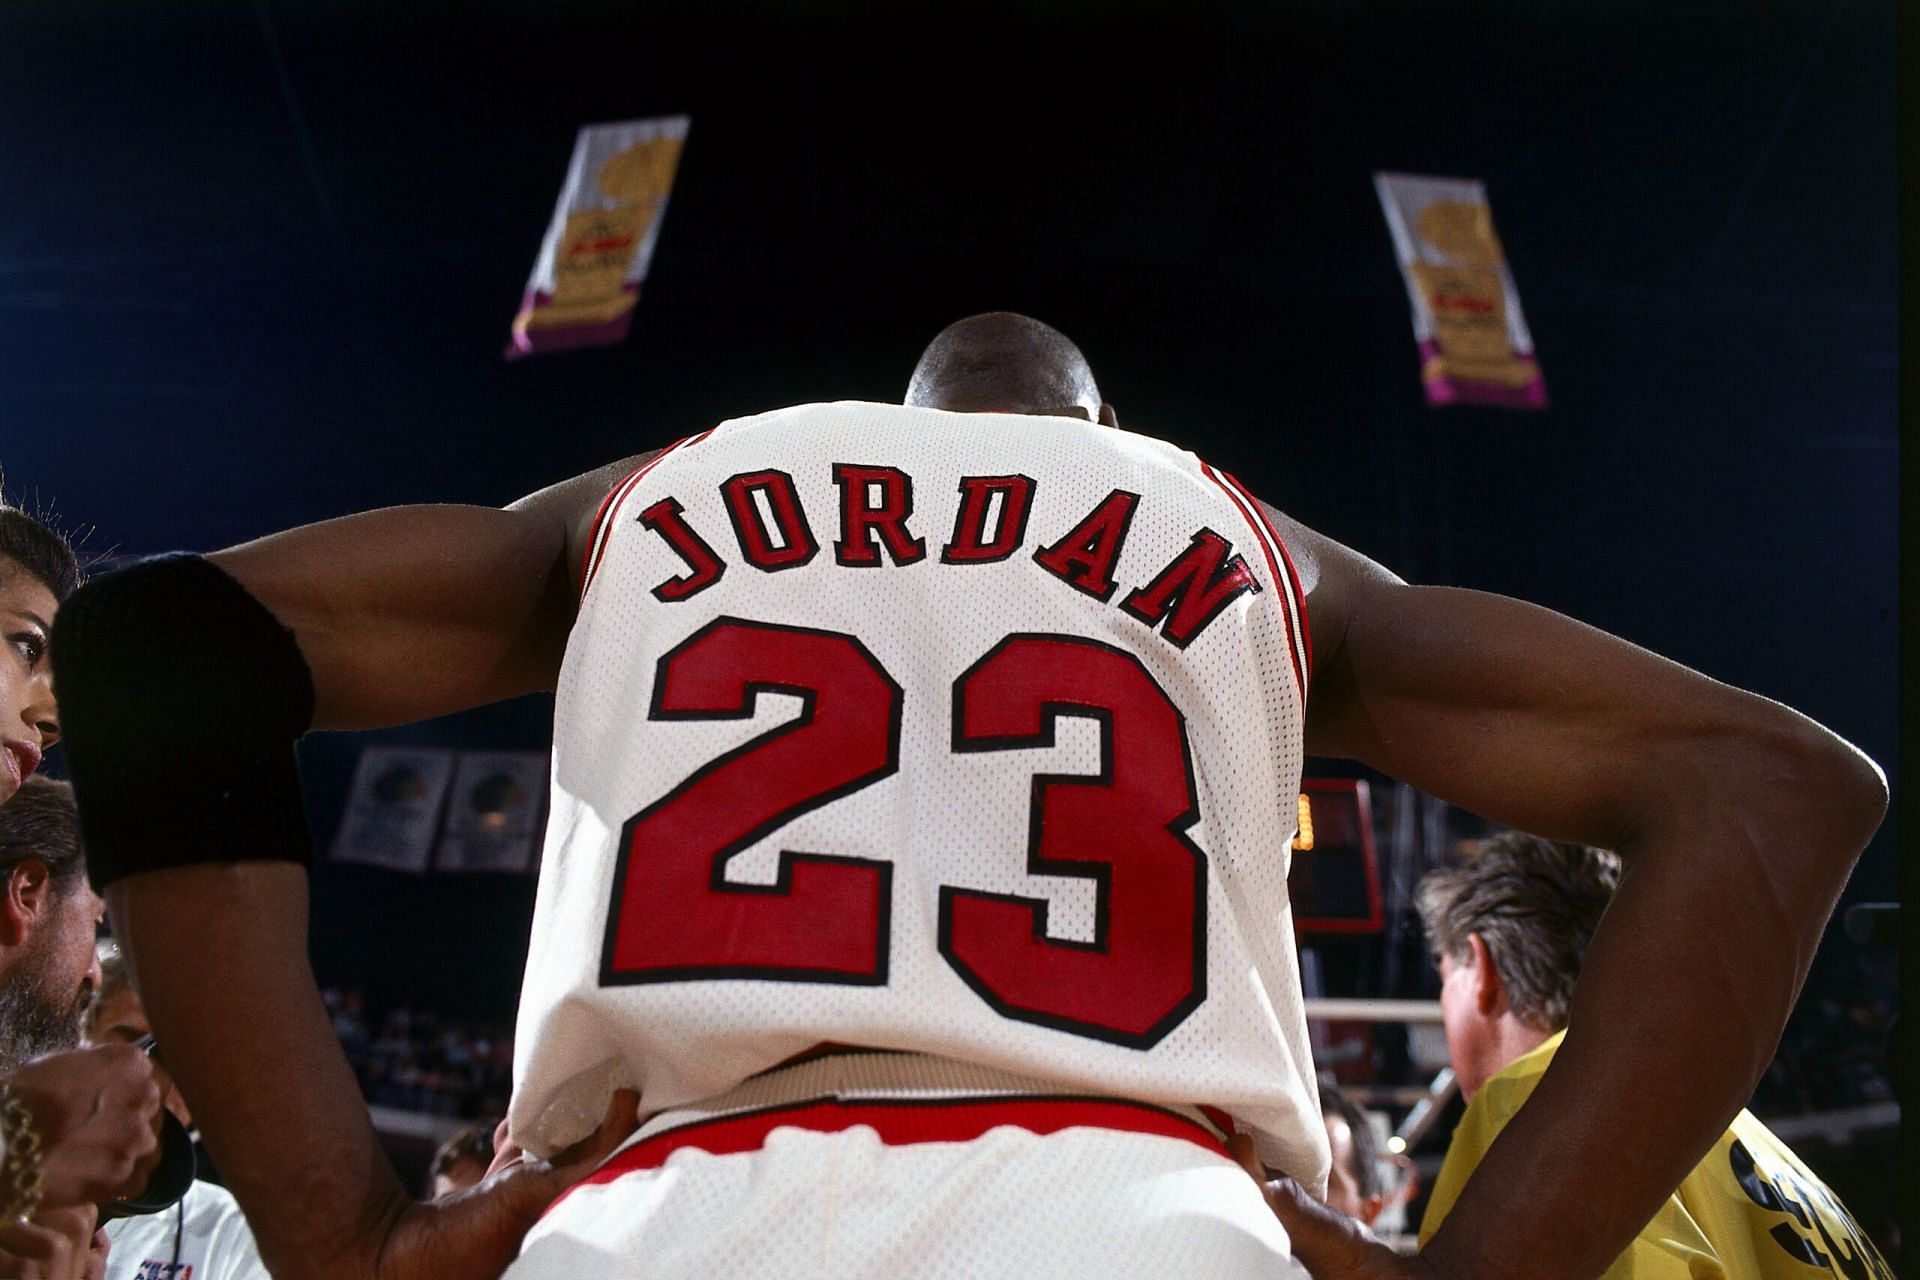 Chicago Bulls and NBA legend Michael Jordan continues to be a successful salesman